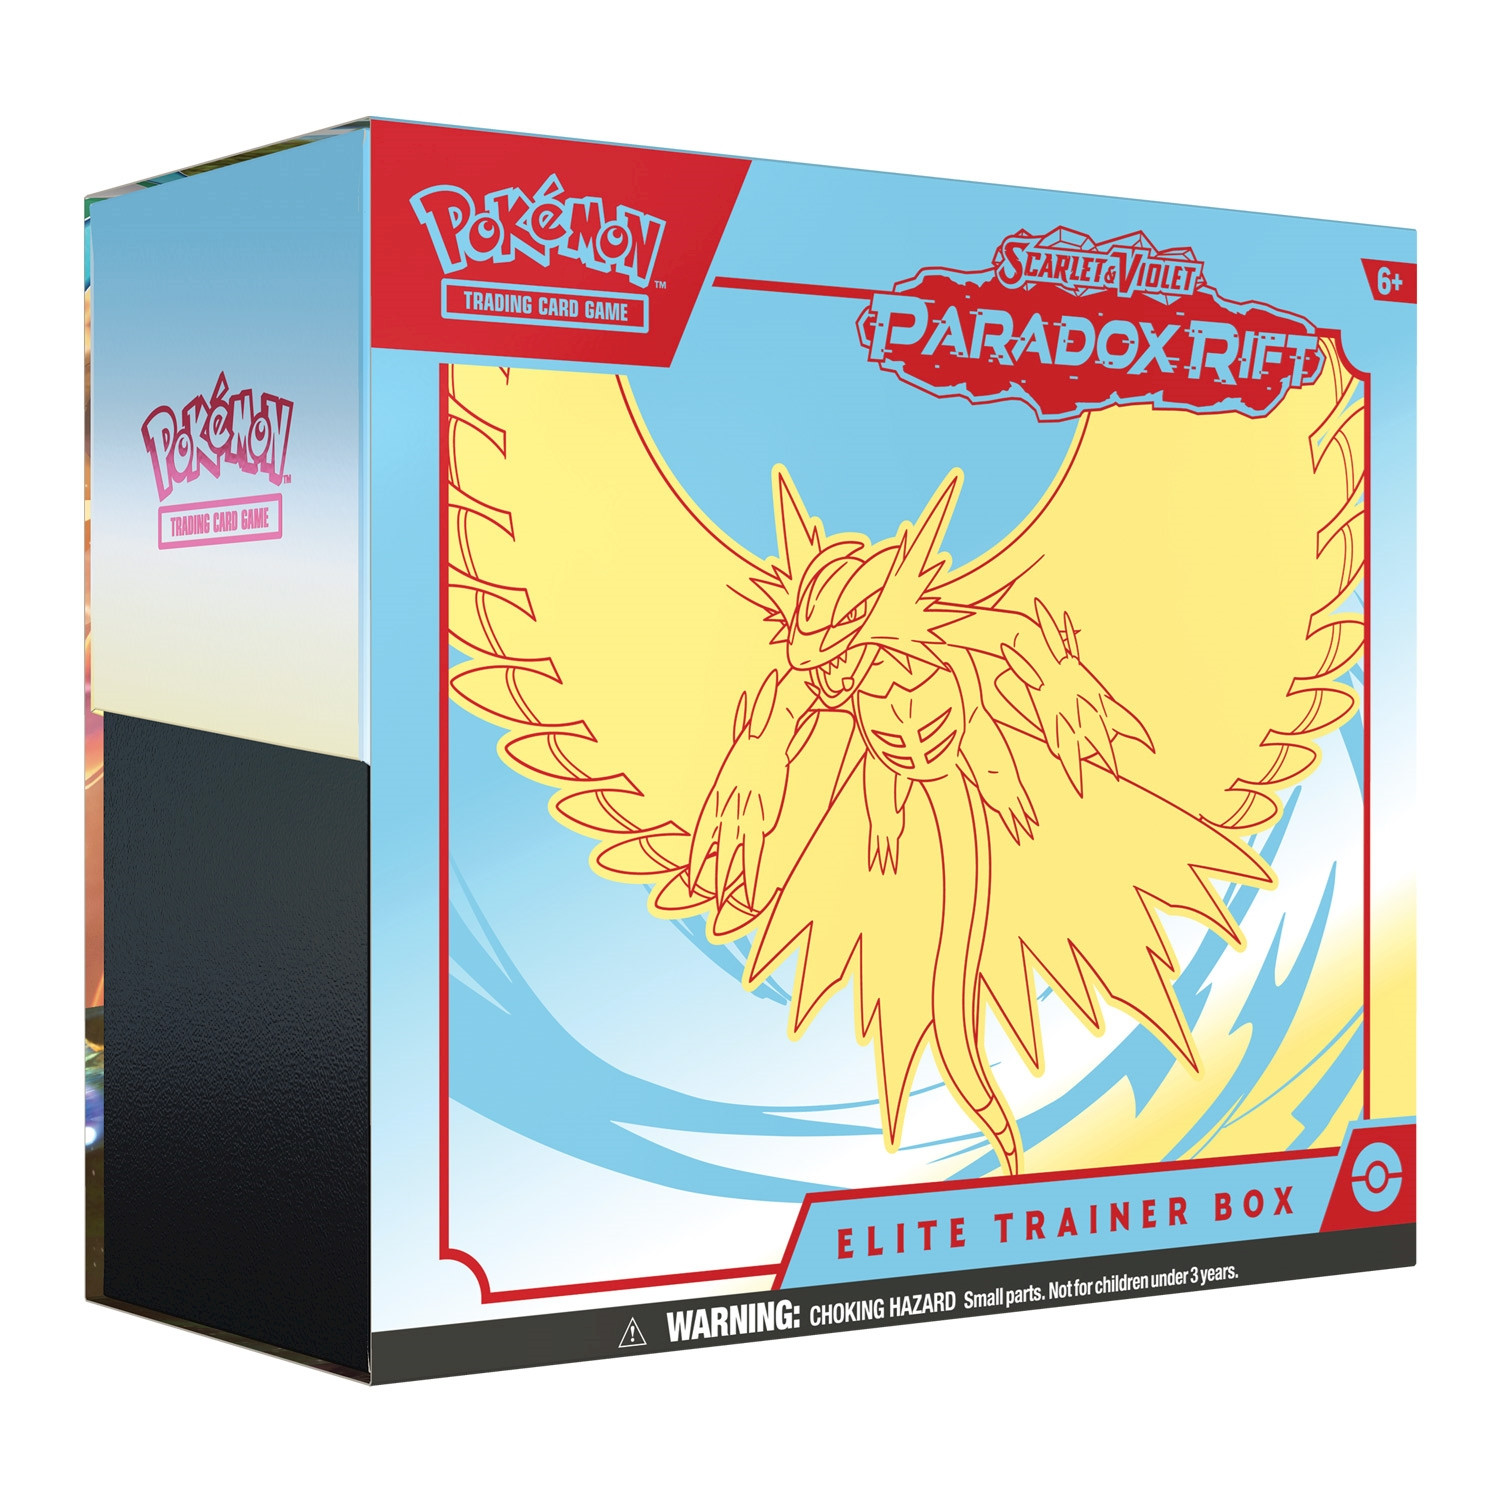 Pokemon - SV04 Faille Paradoxe - 3-Pack Blister Set - The Mana Shop